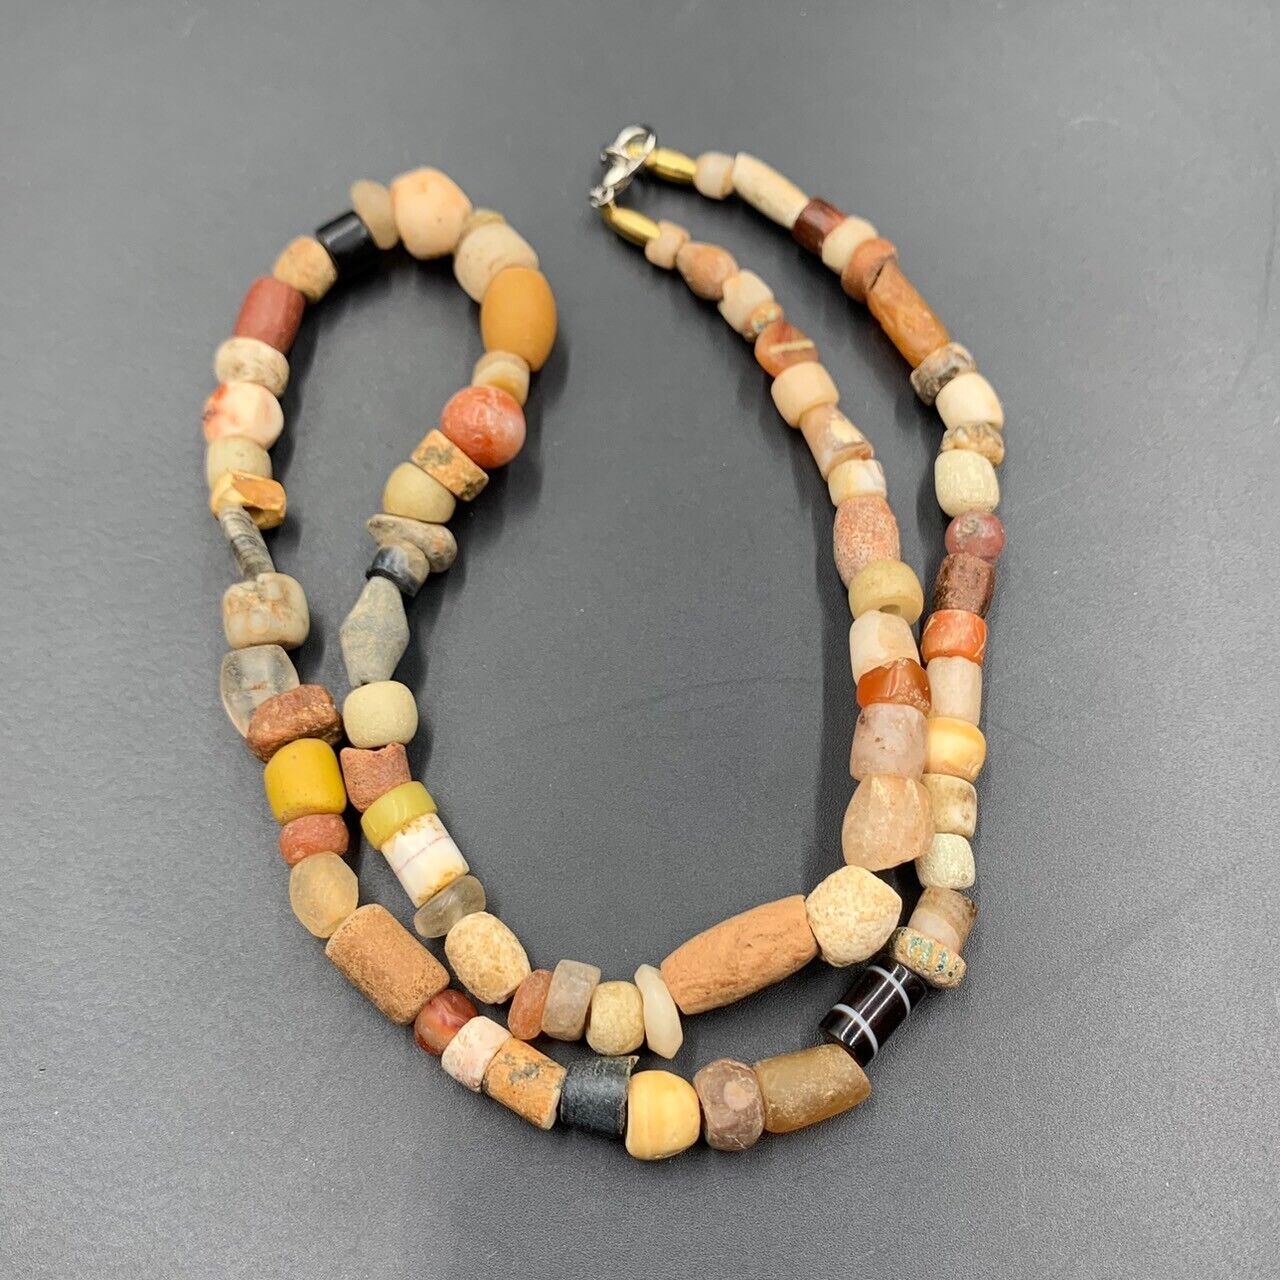 Ancient Antique Stone Beads Necklace, Authentic Antique Beads Mala